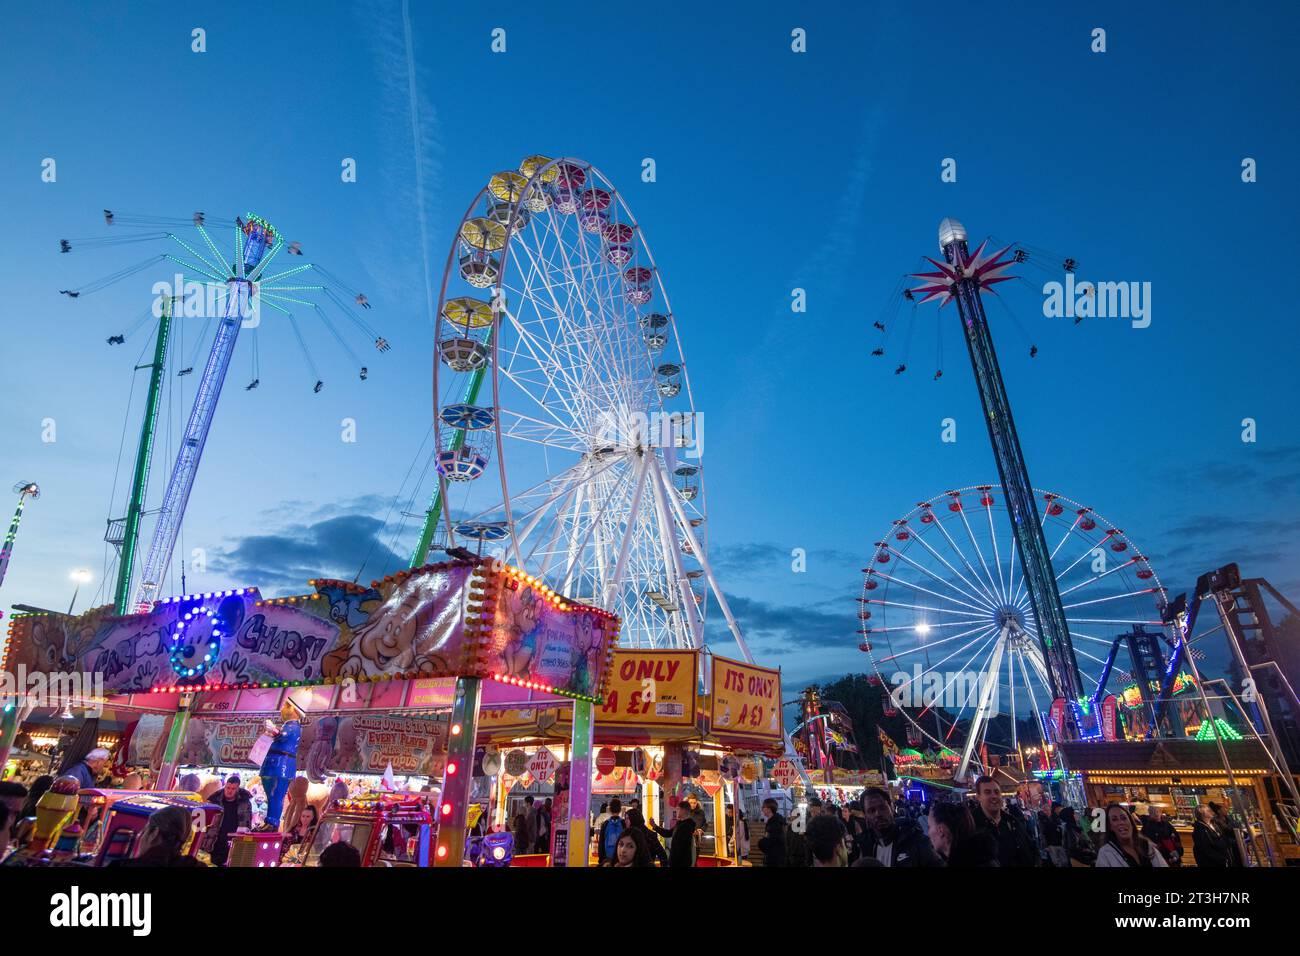 Am frühen Abend auf der Goose Fair, Nottingham Nottinghamshire England, Großbritannien Stockfoto